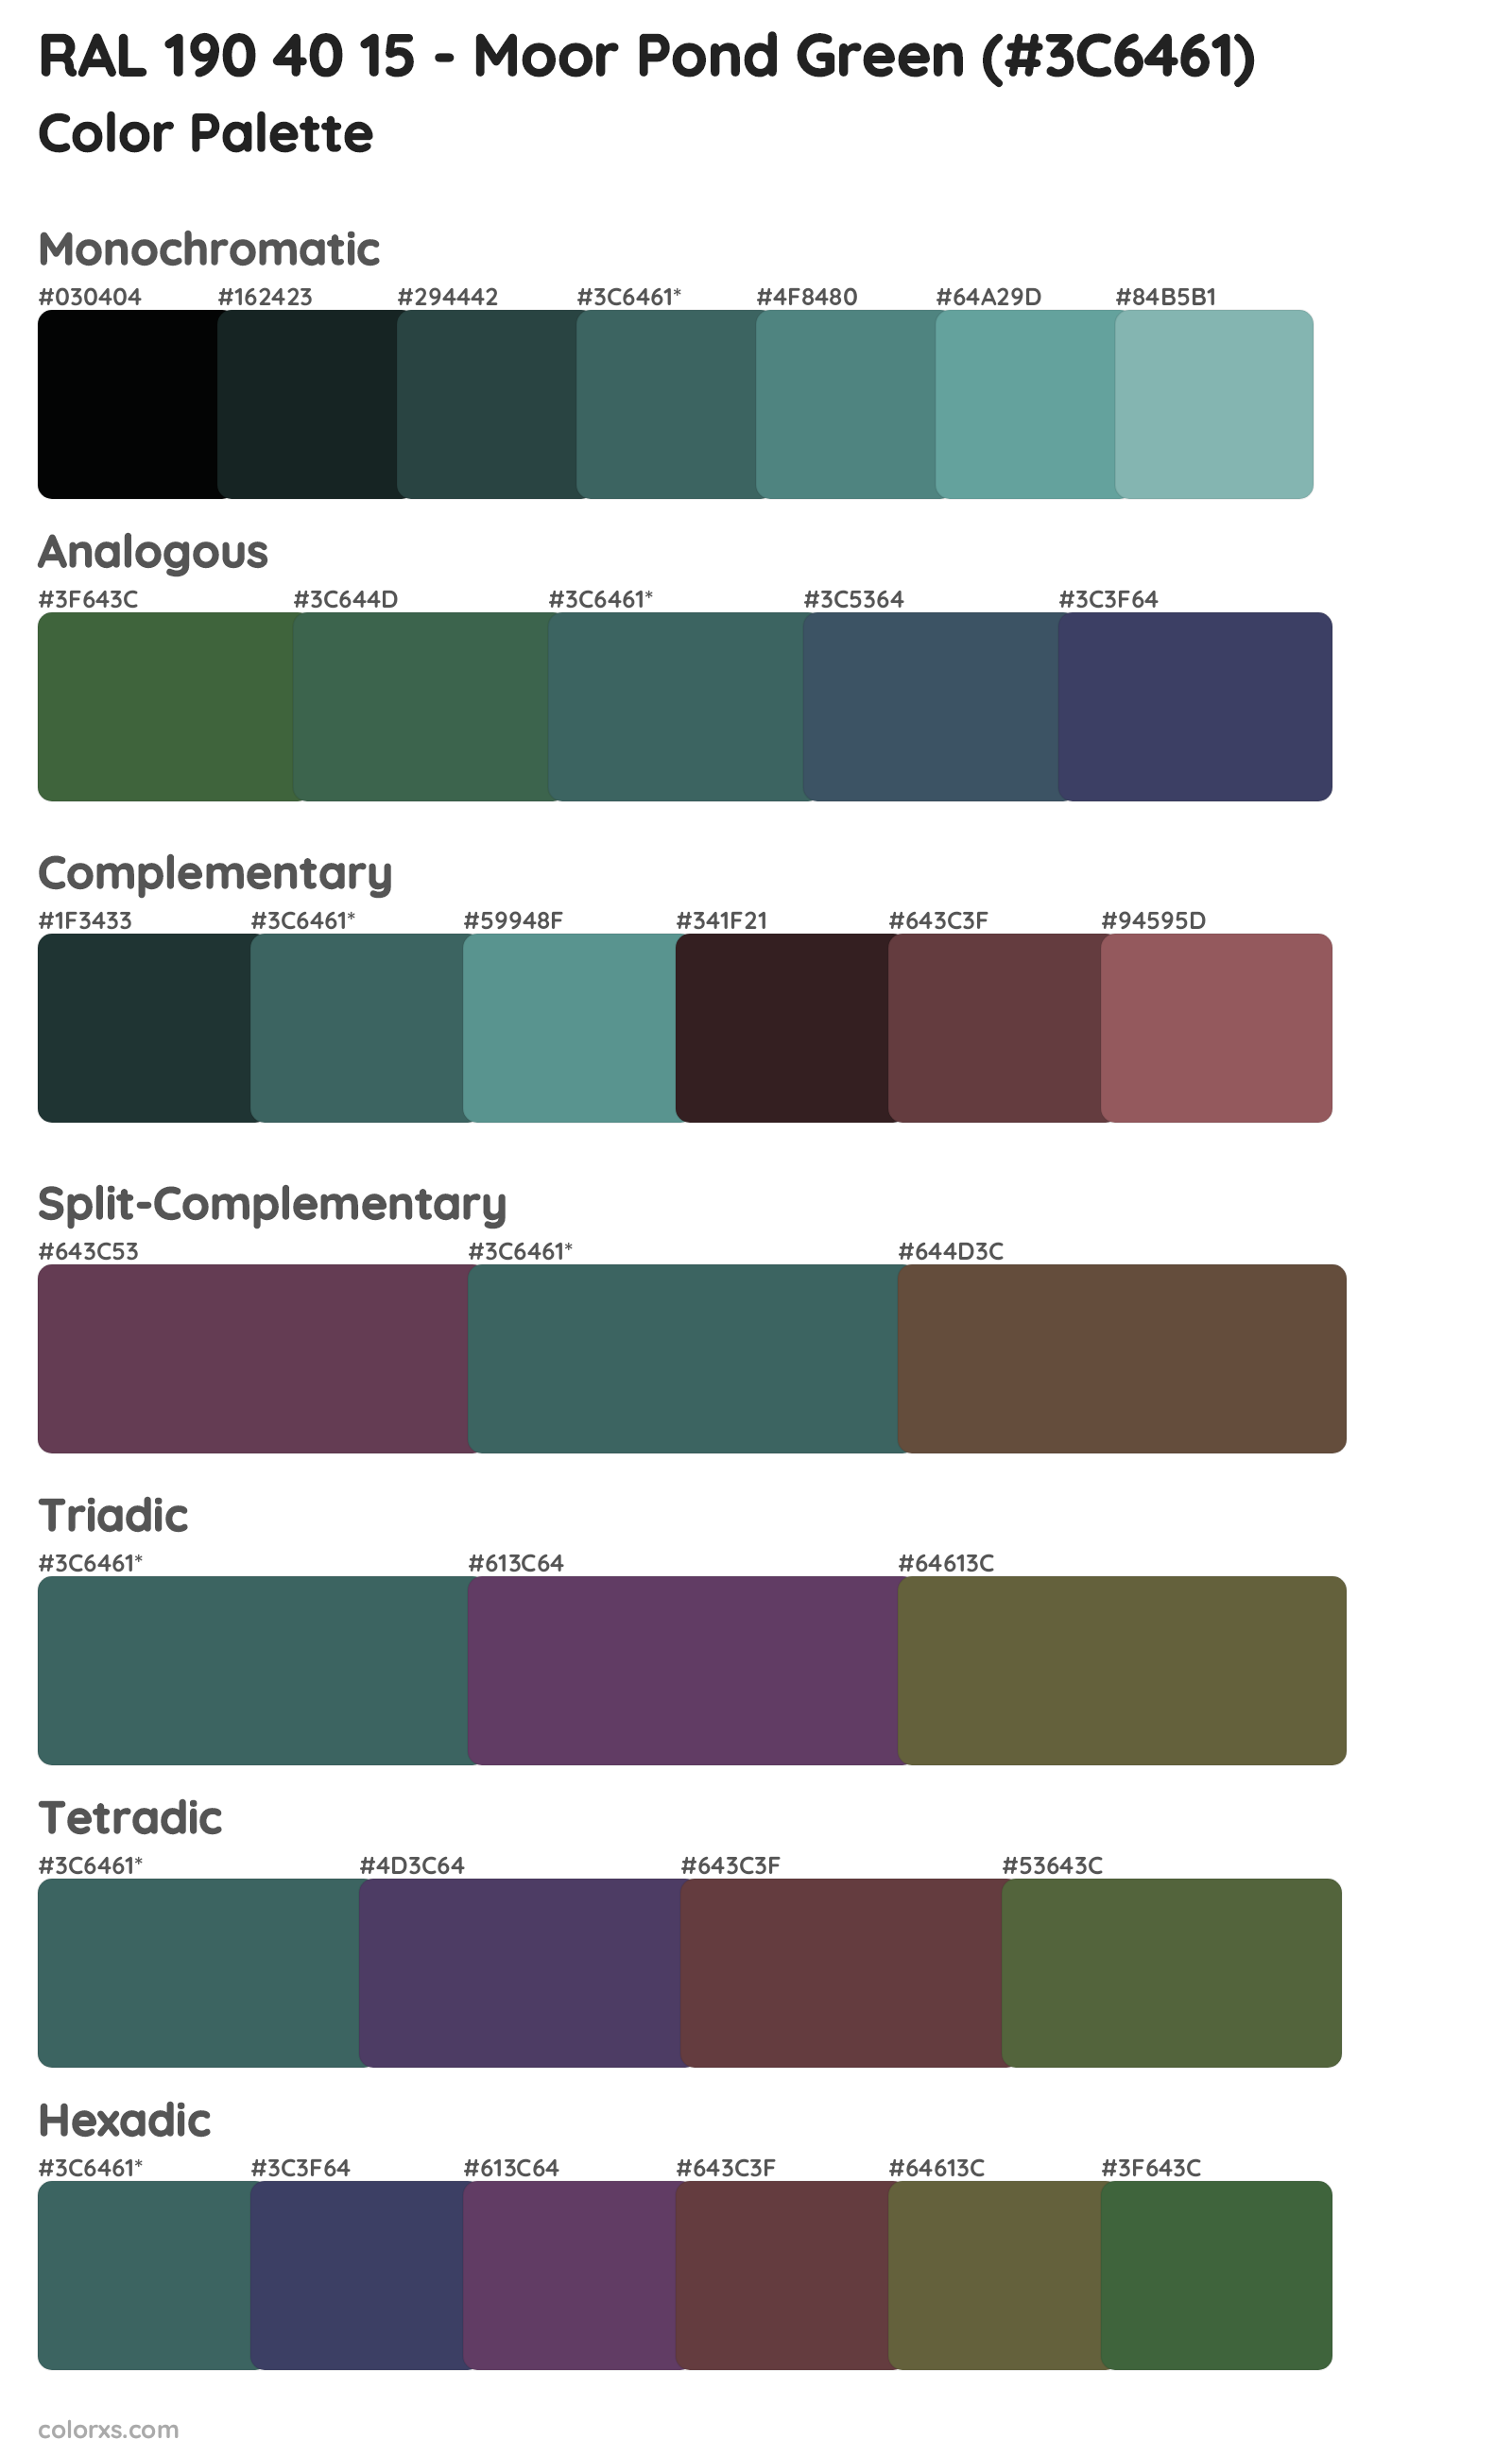 RAL 190 40 15 - Moor Pond Green Color Scheme Palettes